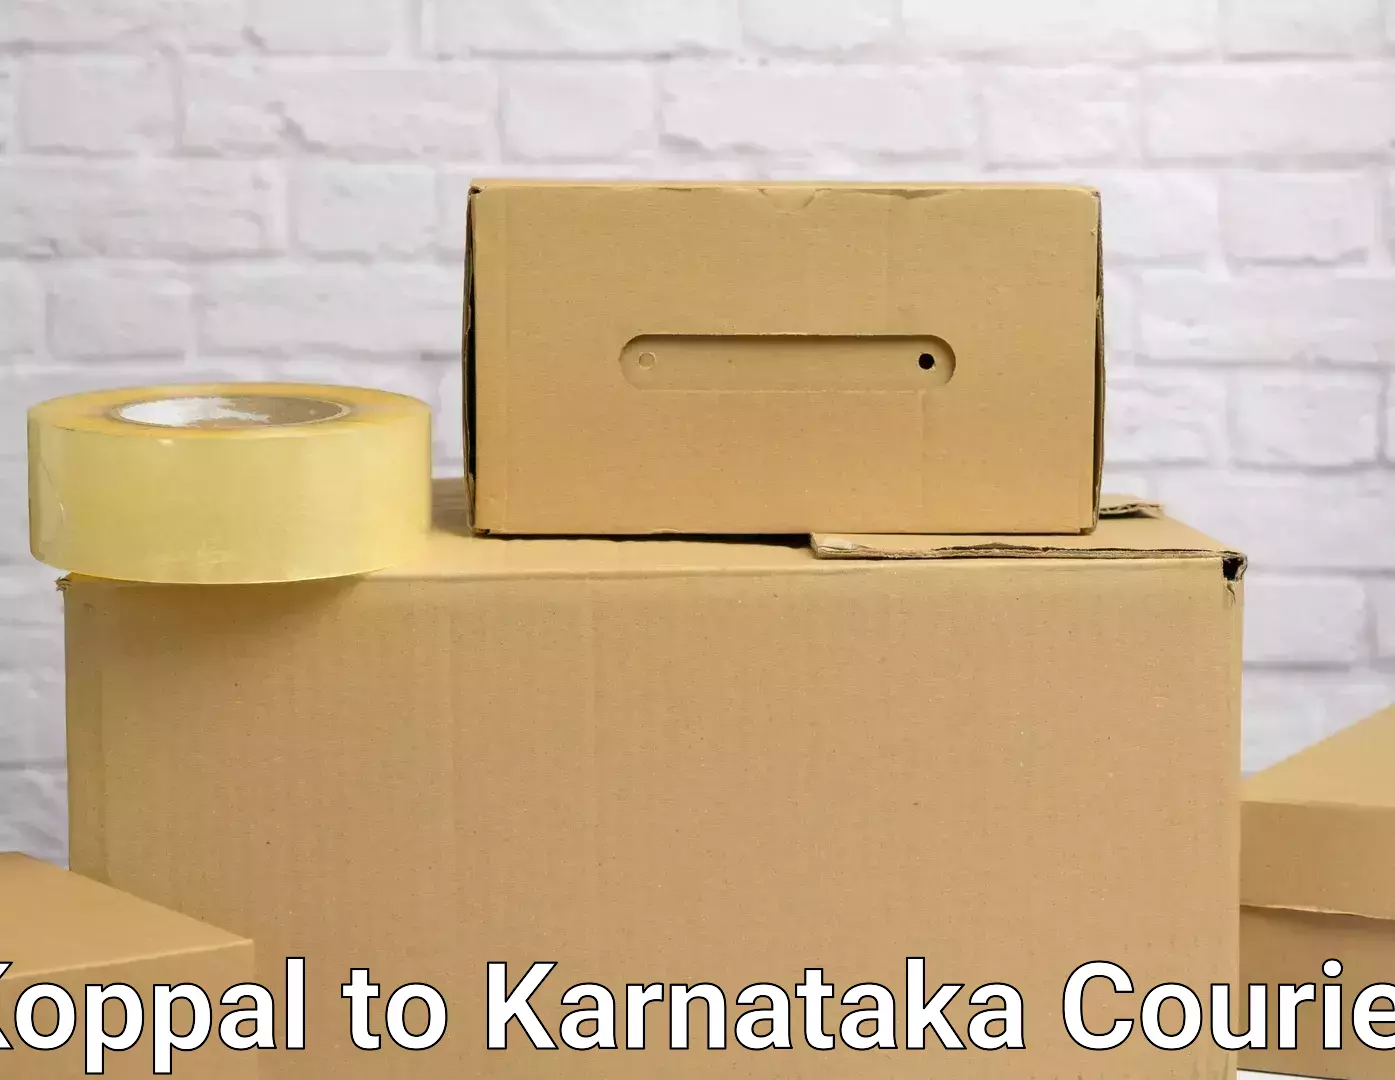 Moving and packing experts Koppal to Karnataka